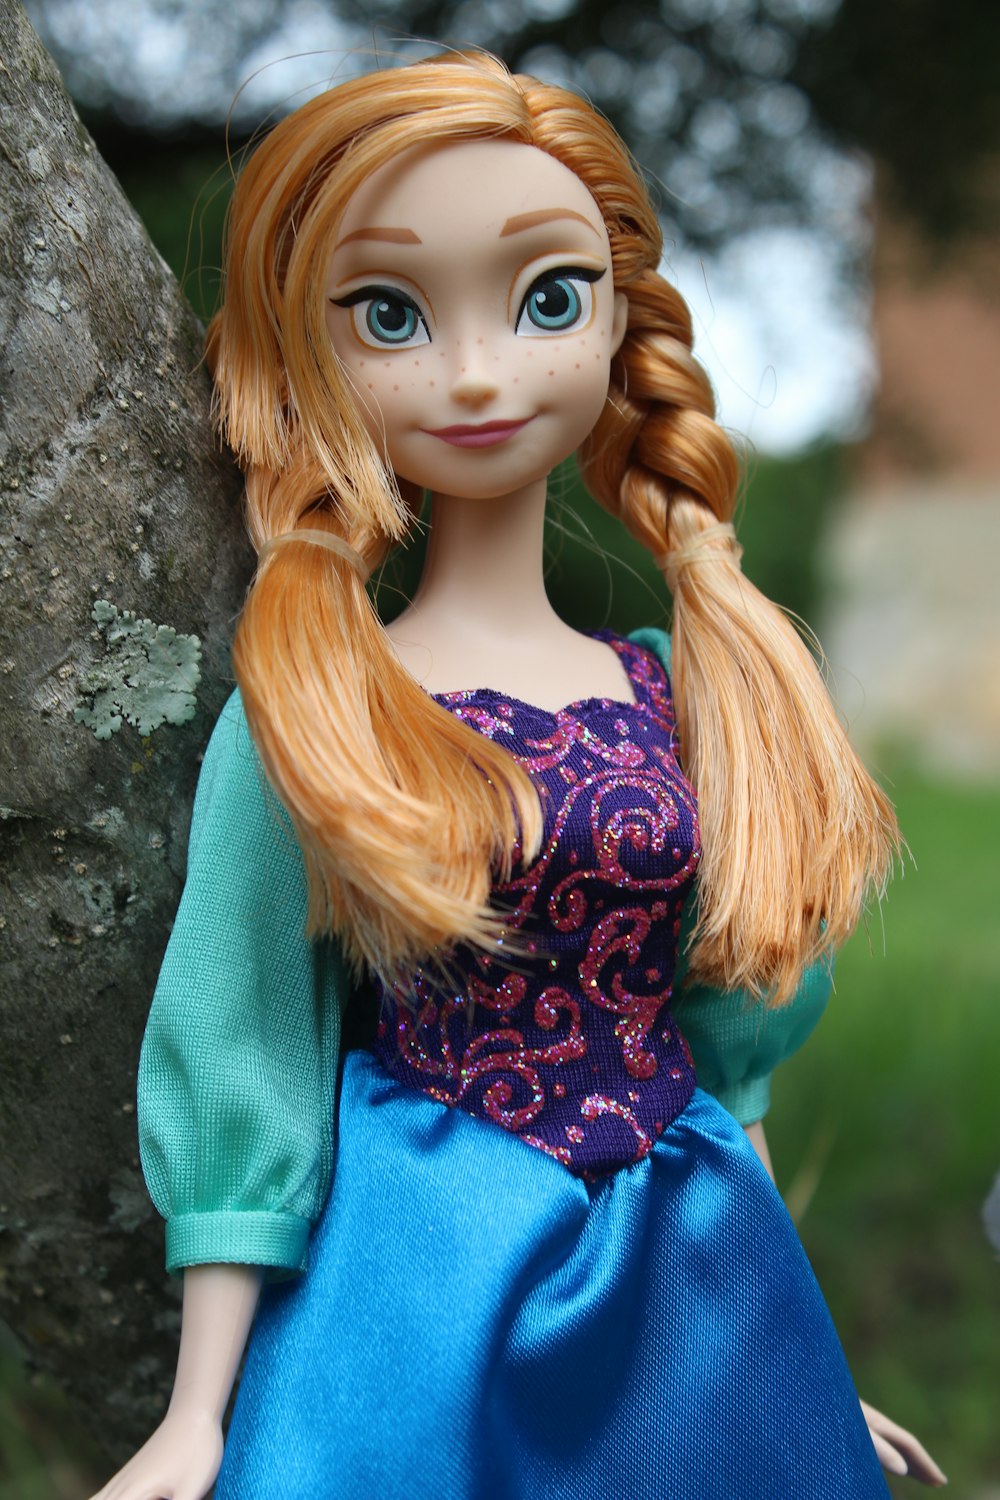 Frozen princess anna doll photo – Free Doll Image on Unsplash